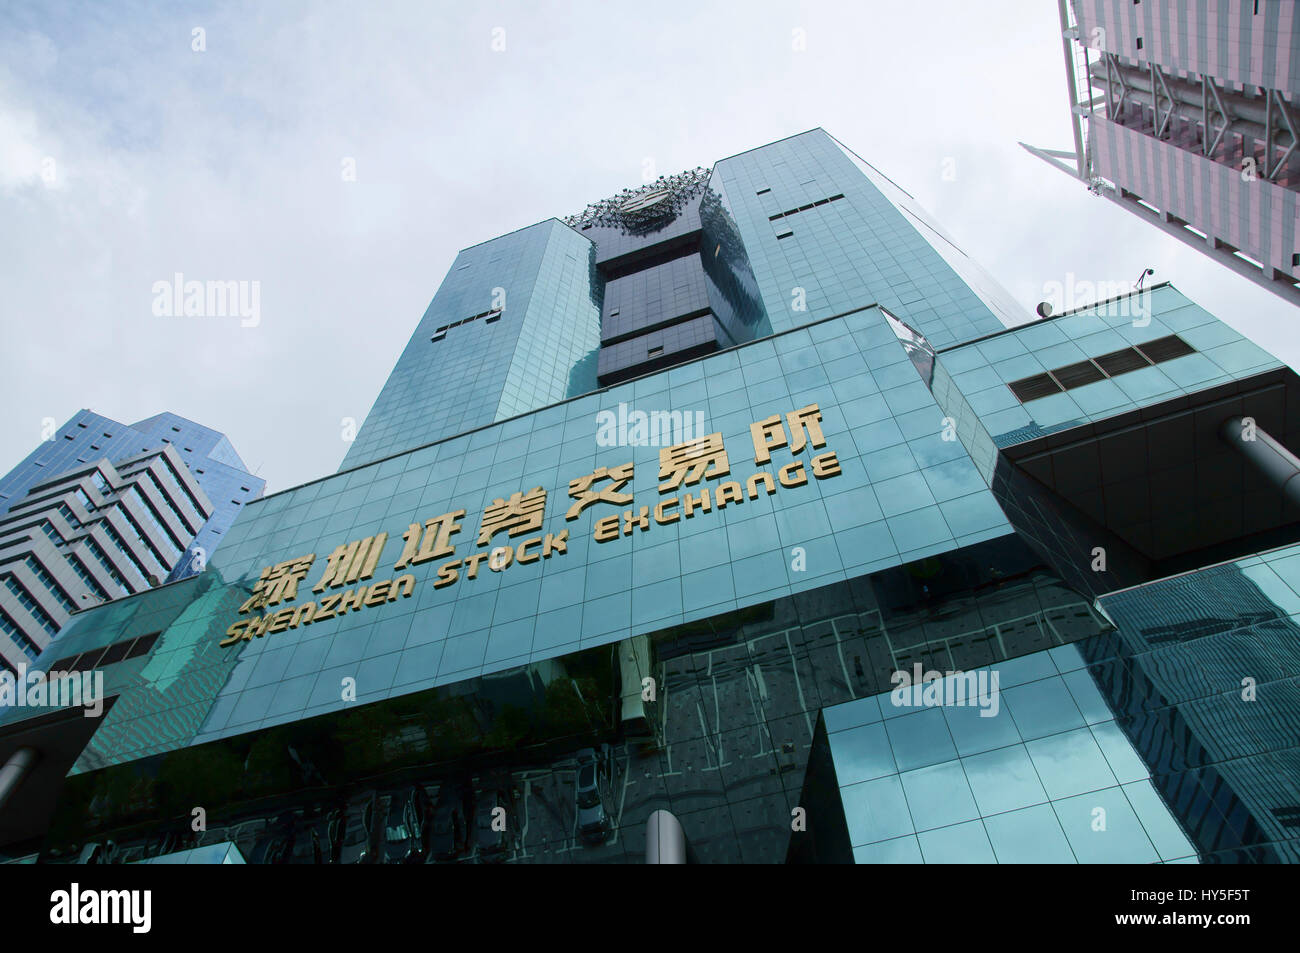 Shenzhen Stock Exchange Stock Photo